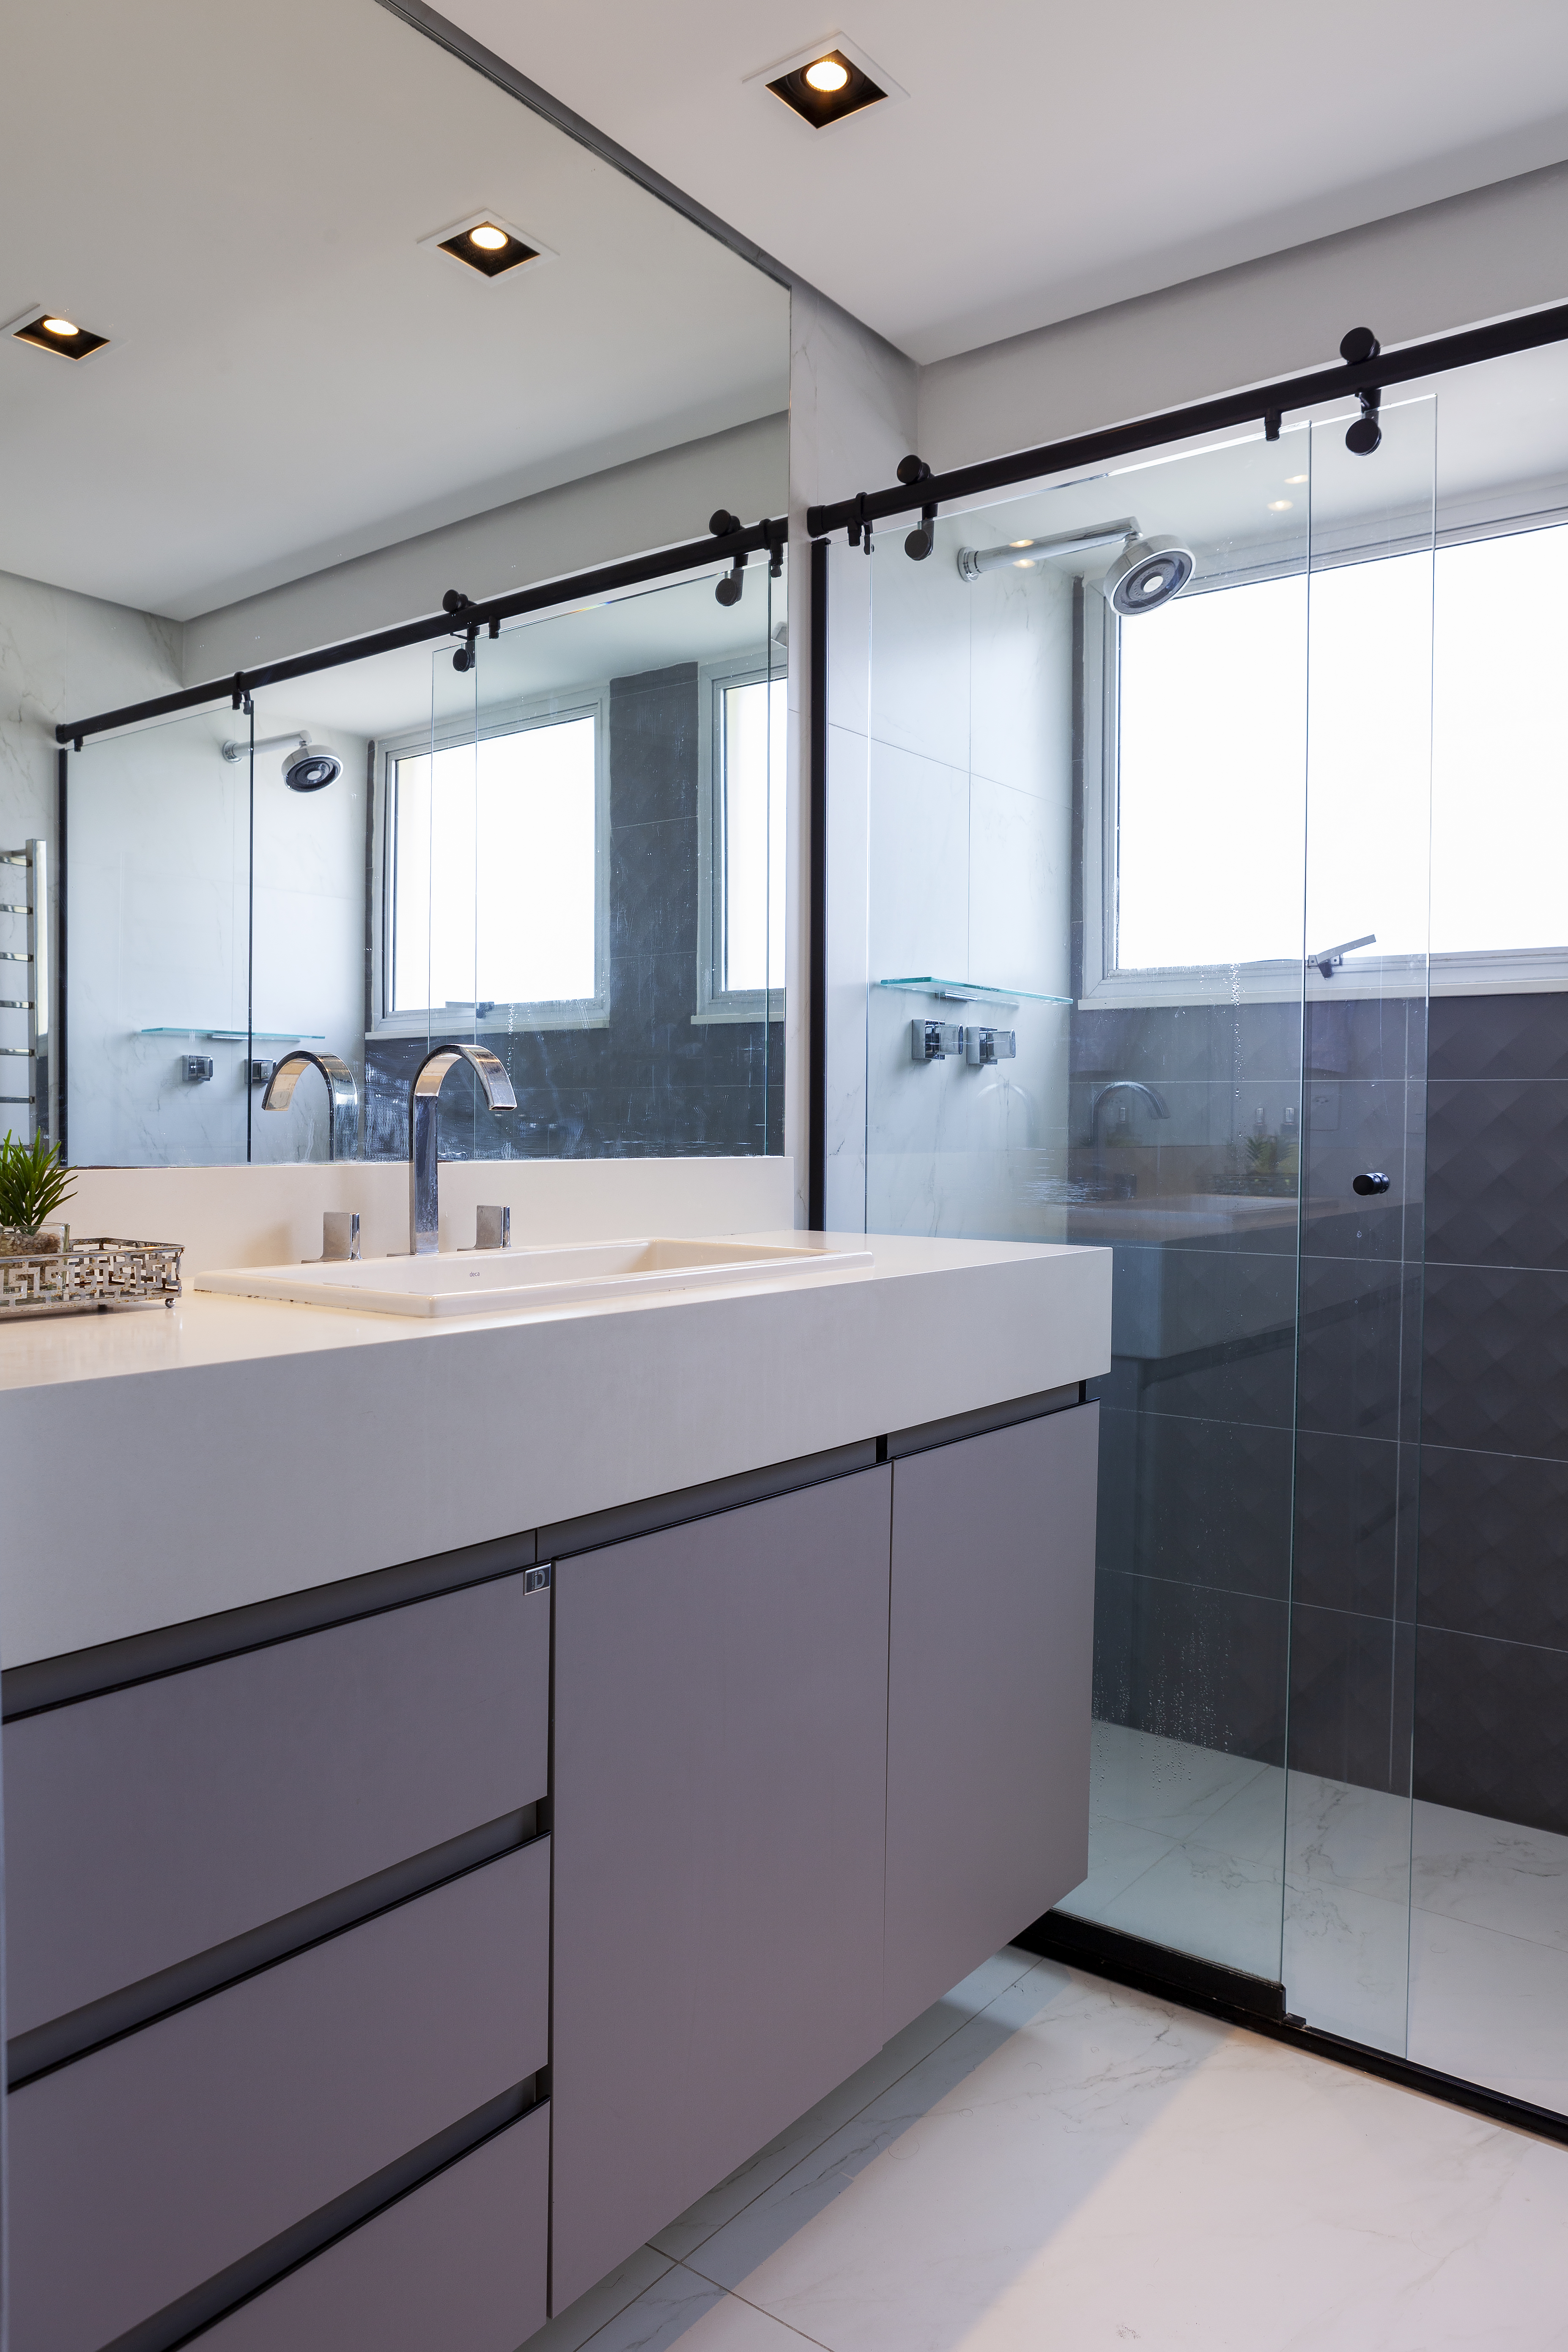 Banheiro com bancada branca, marcenaria cinza e box de vidro.